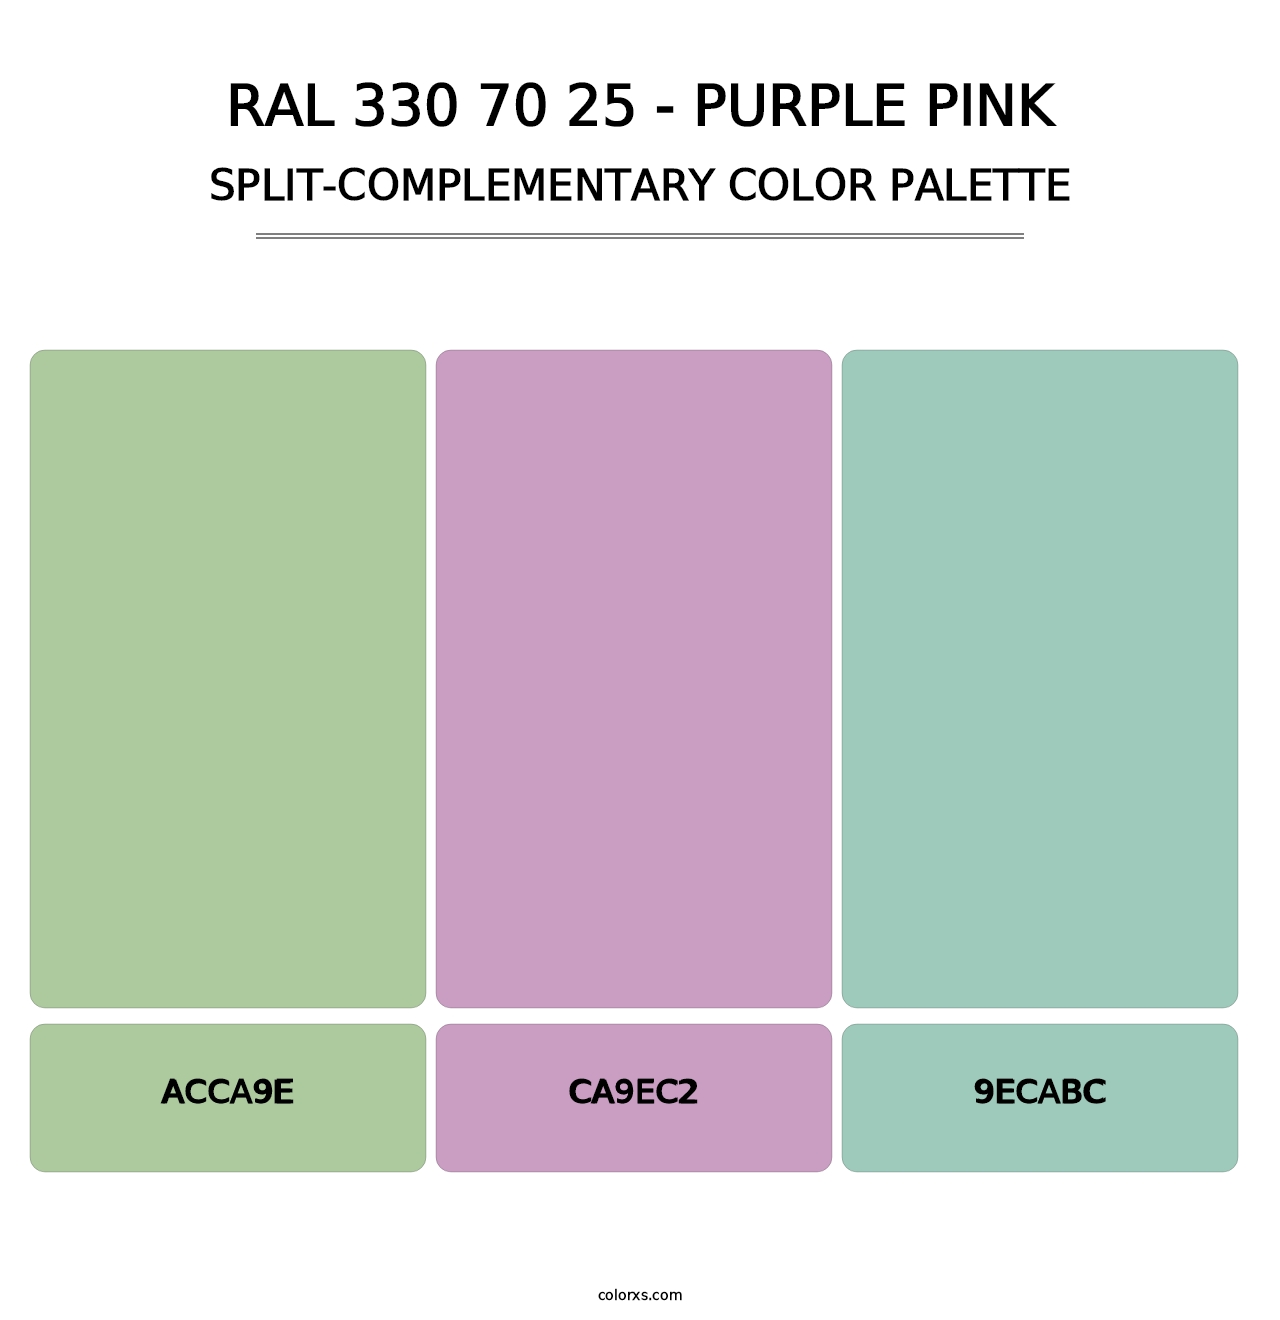 RAL 330 70 25 - Purple Pink - Split-Complementary Color Palette